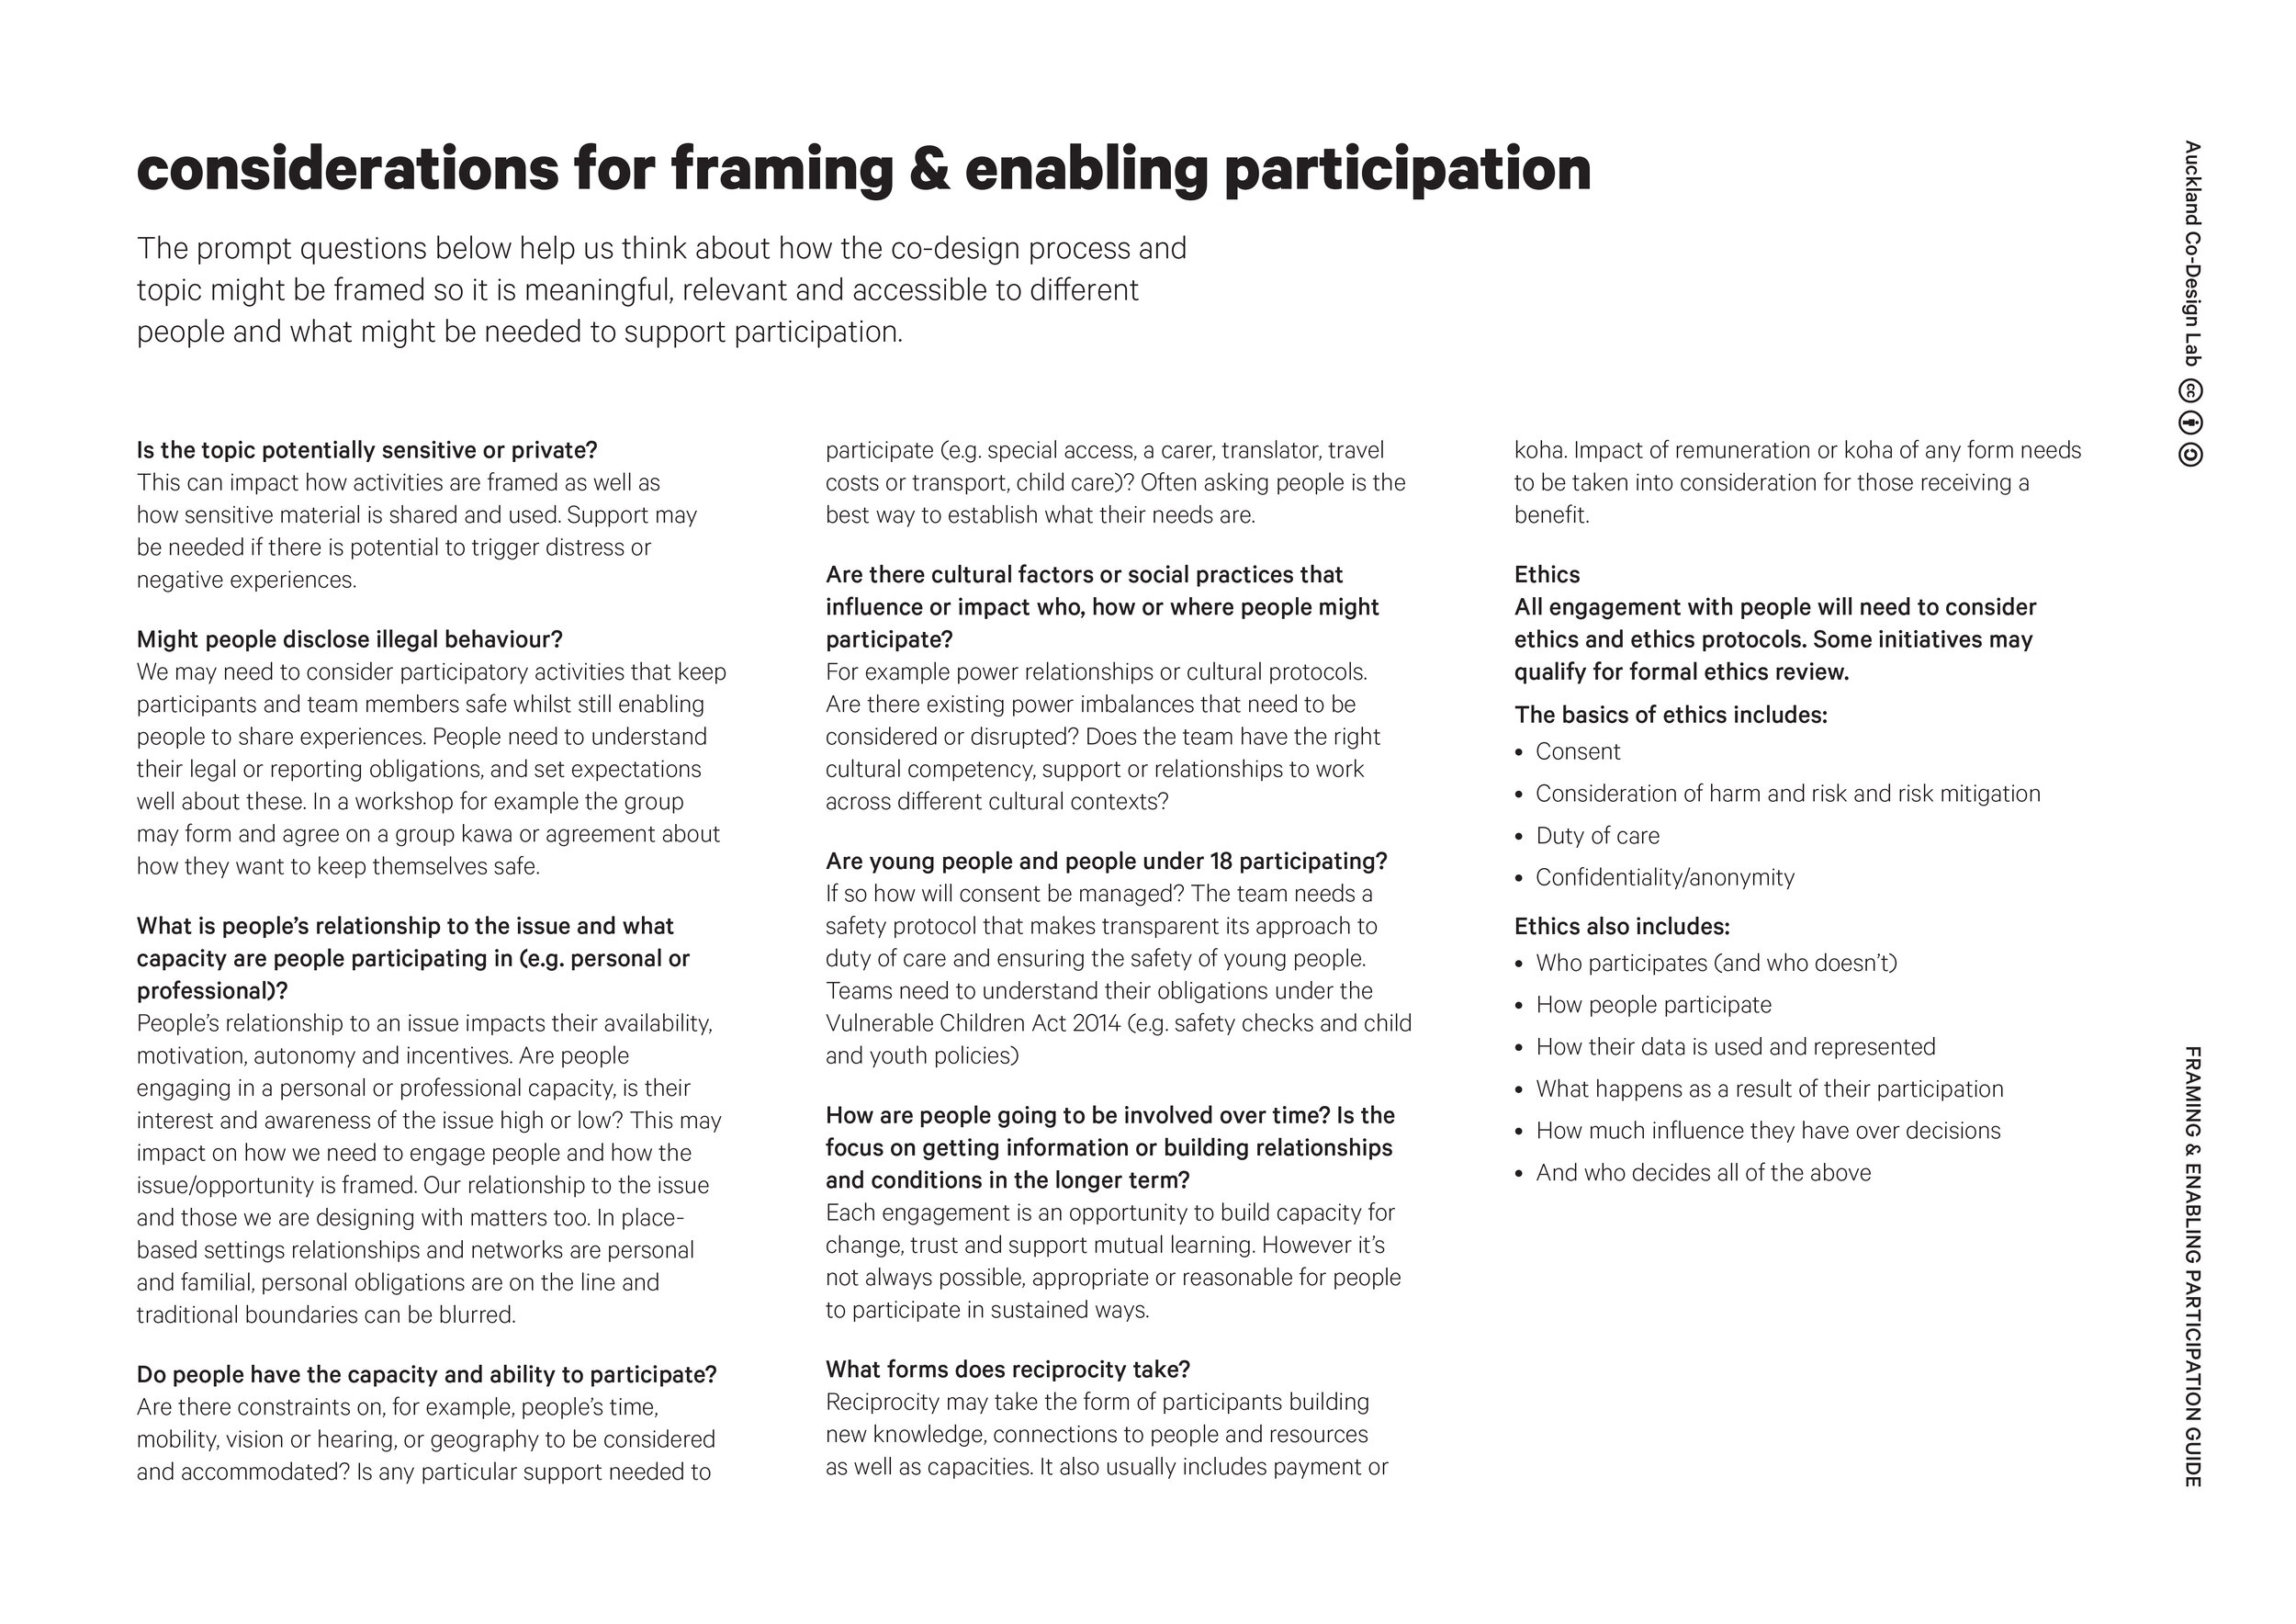 framing_enabling_participation_guide-4.jpg